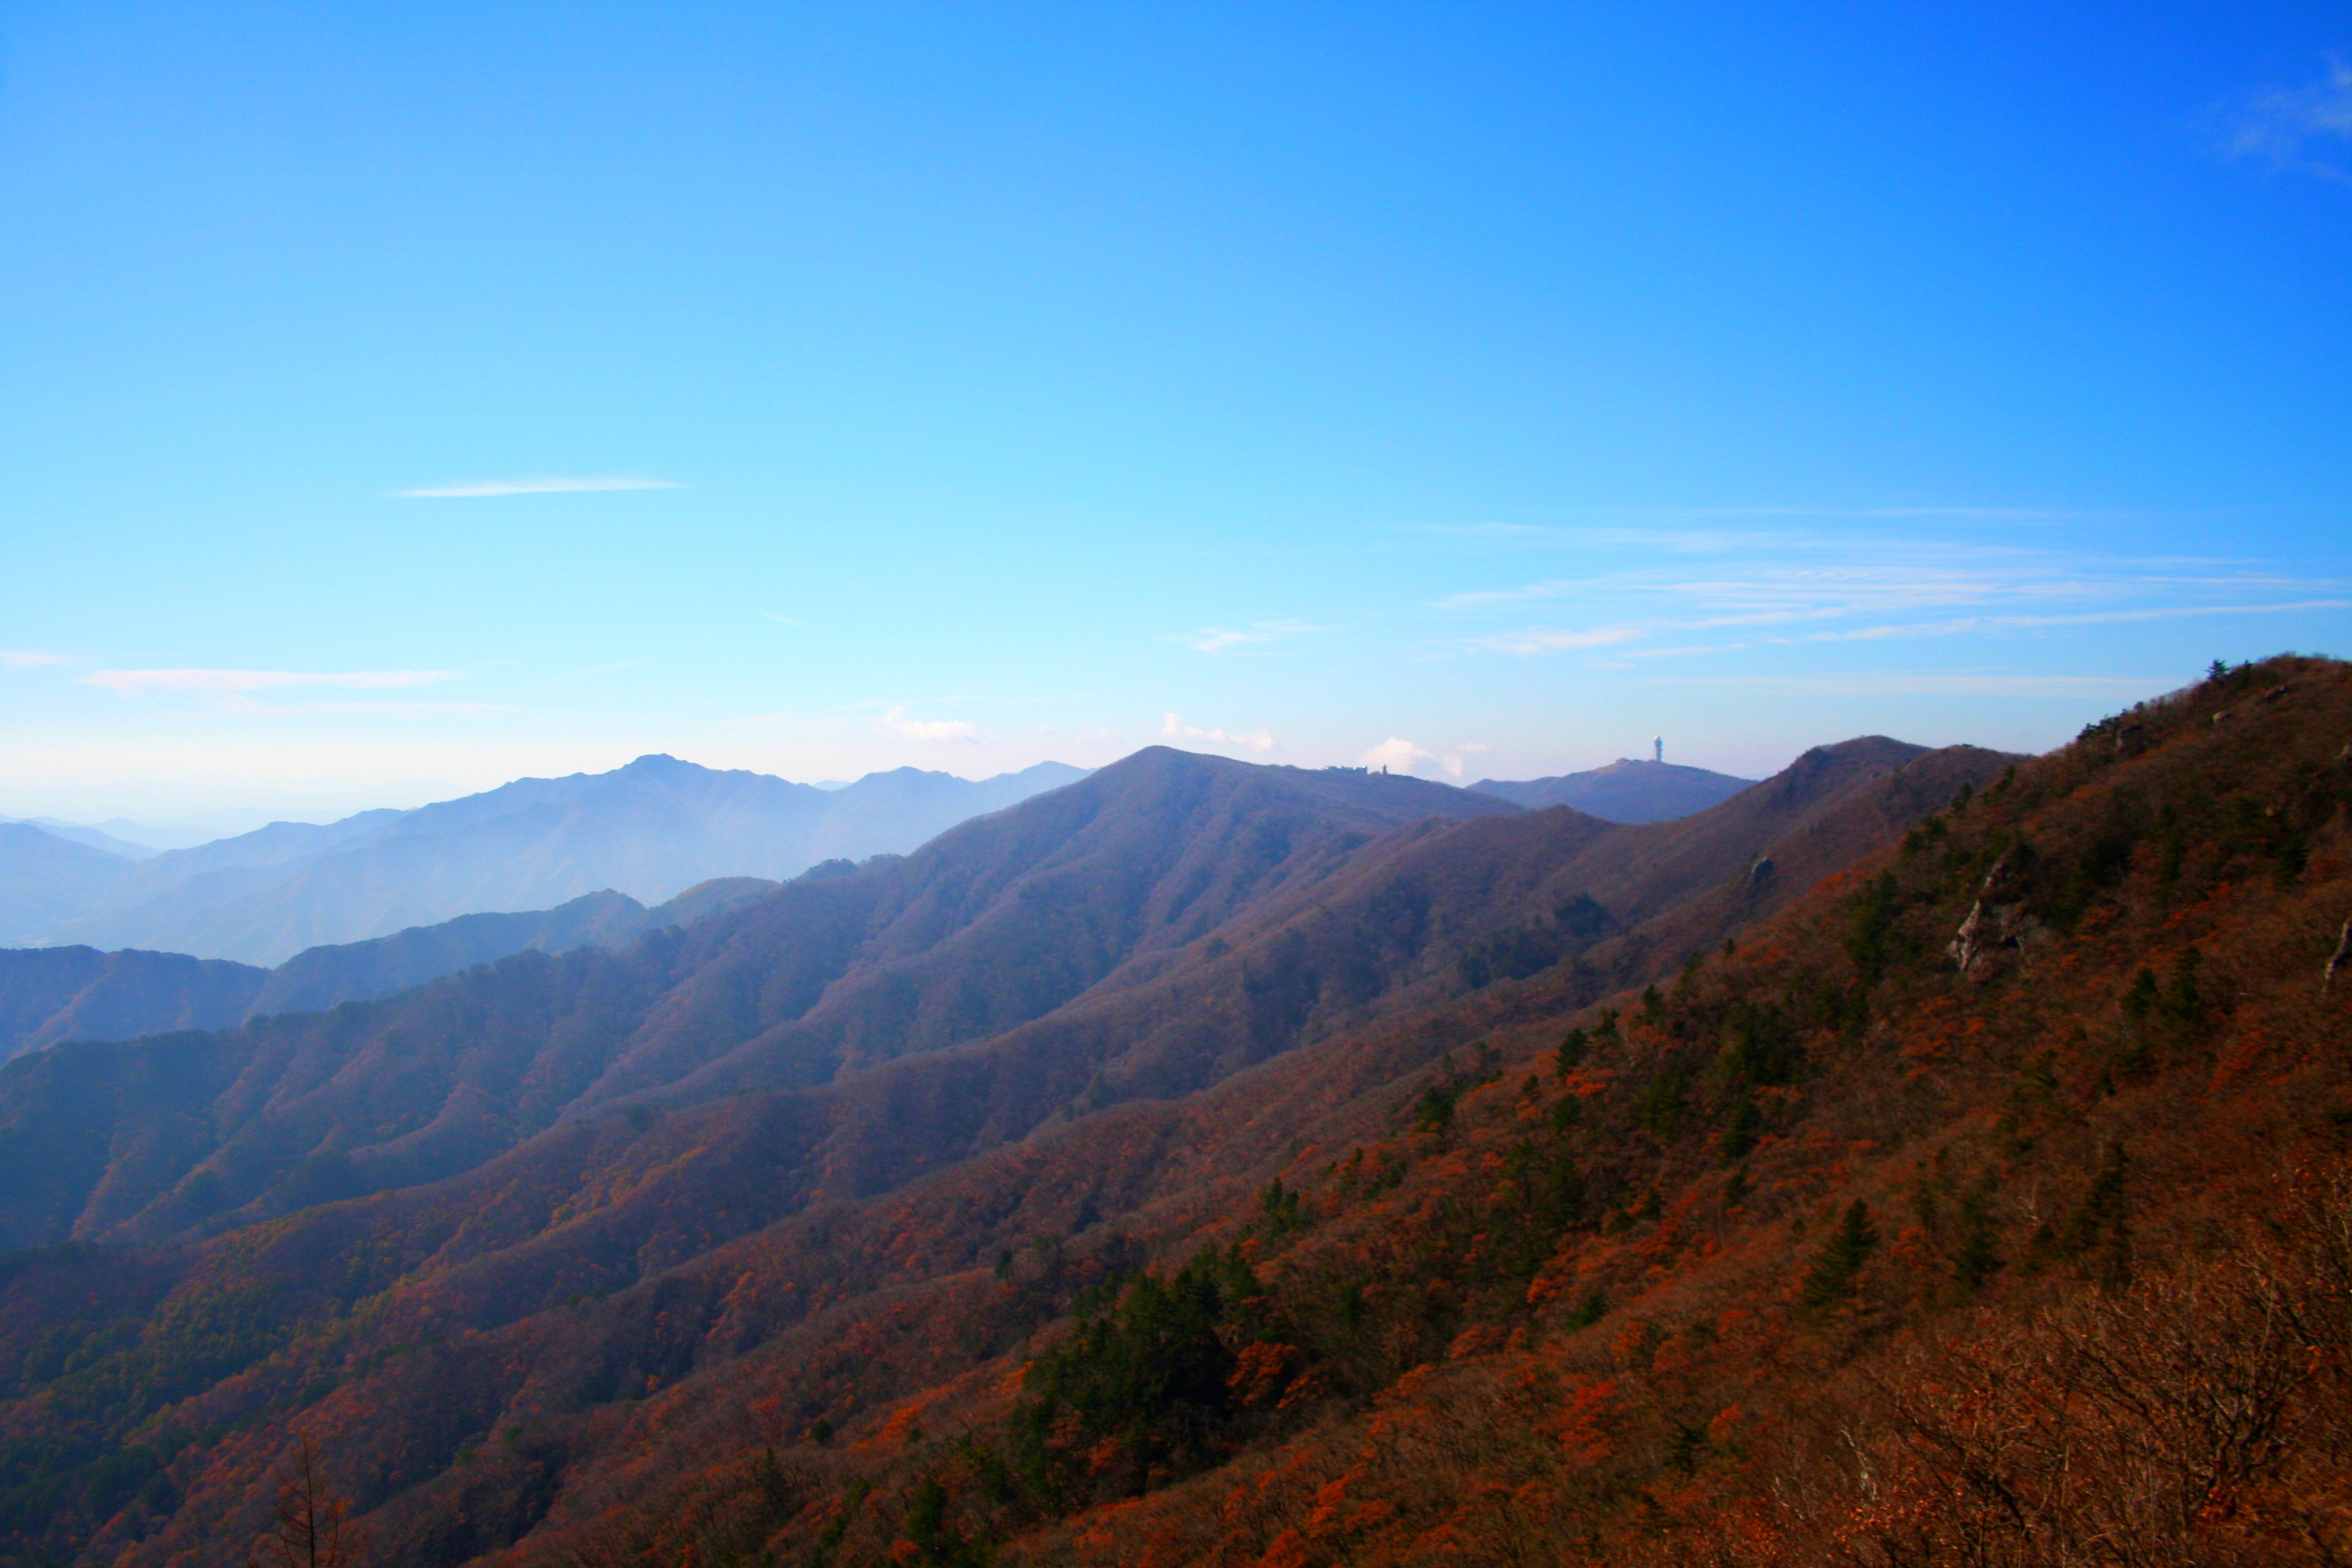 Mount Sobaek